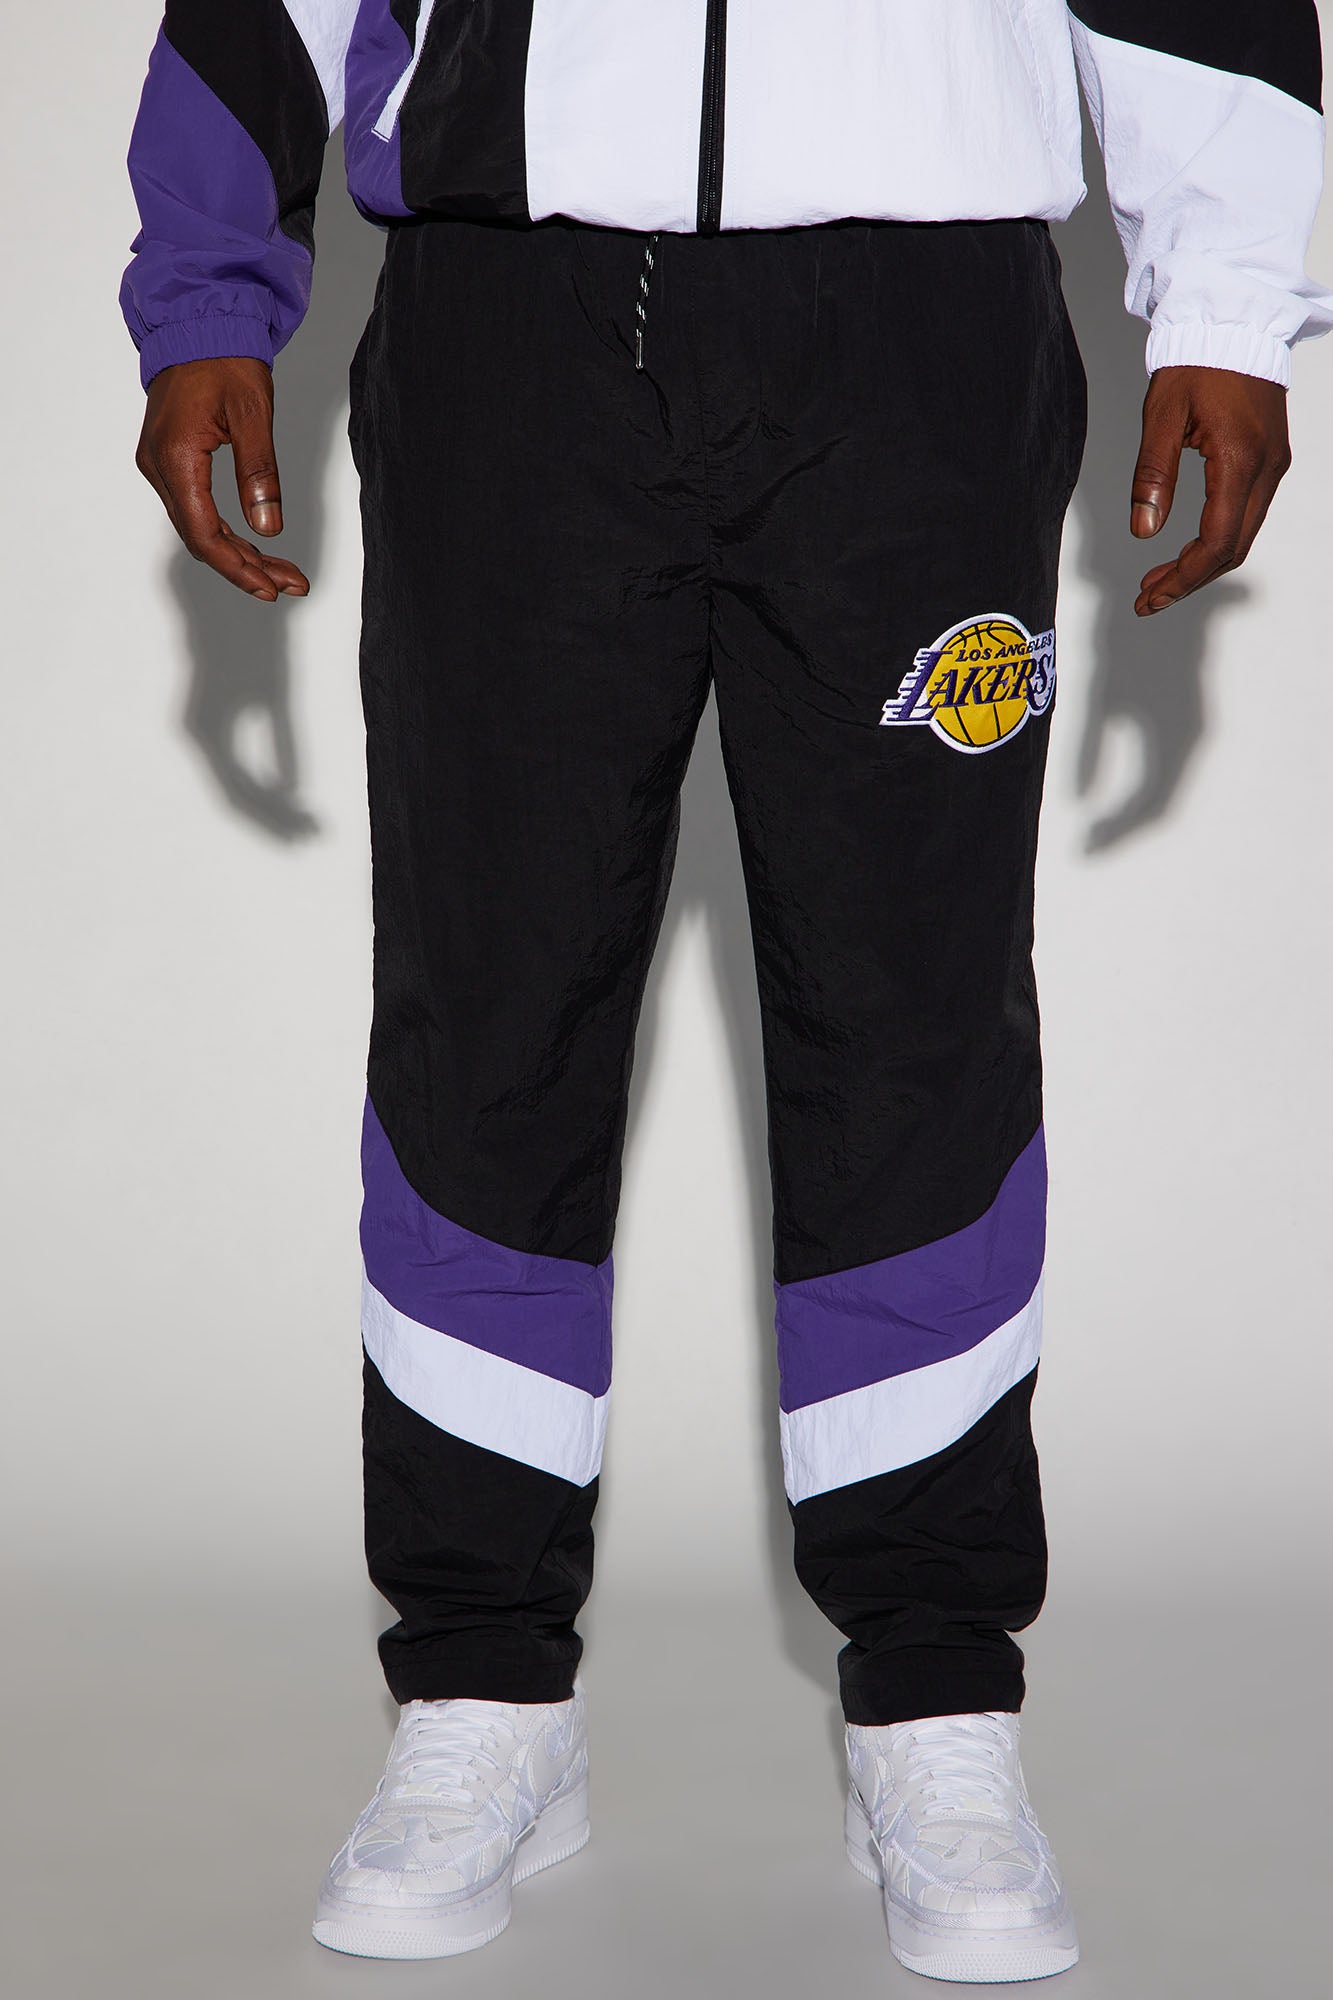 Nike Los Angeles Lakers Tracksuit START5 Black/Yellow - BLACK/FIELD PURPLE